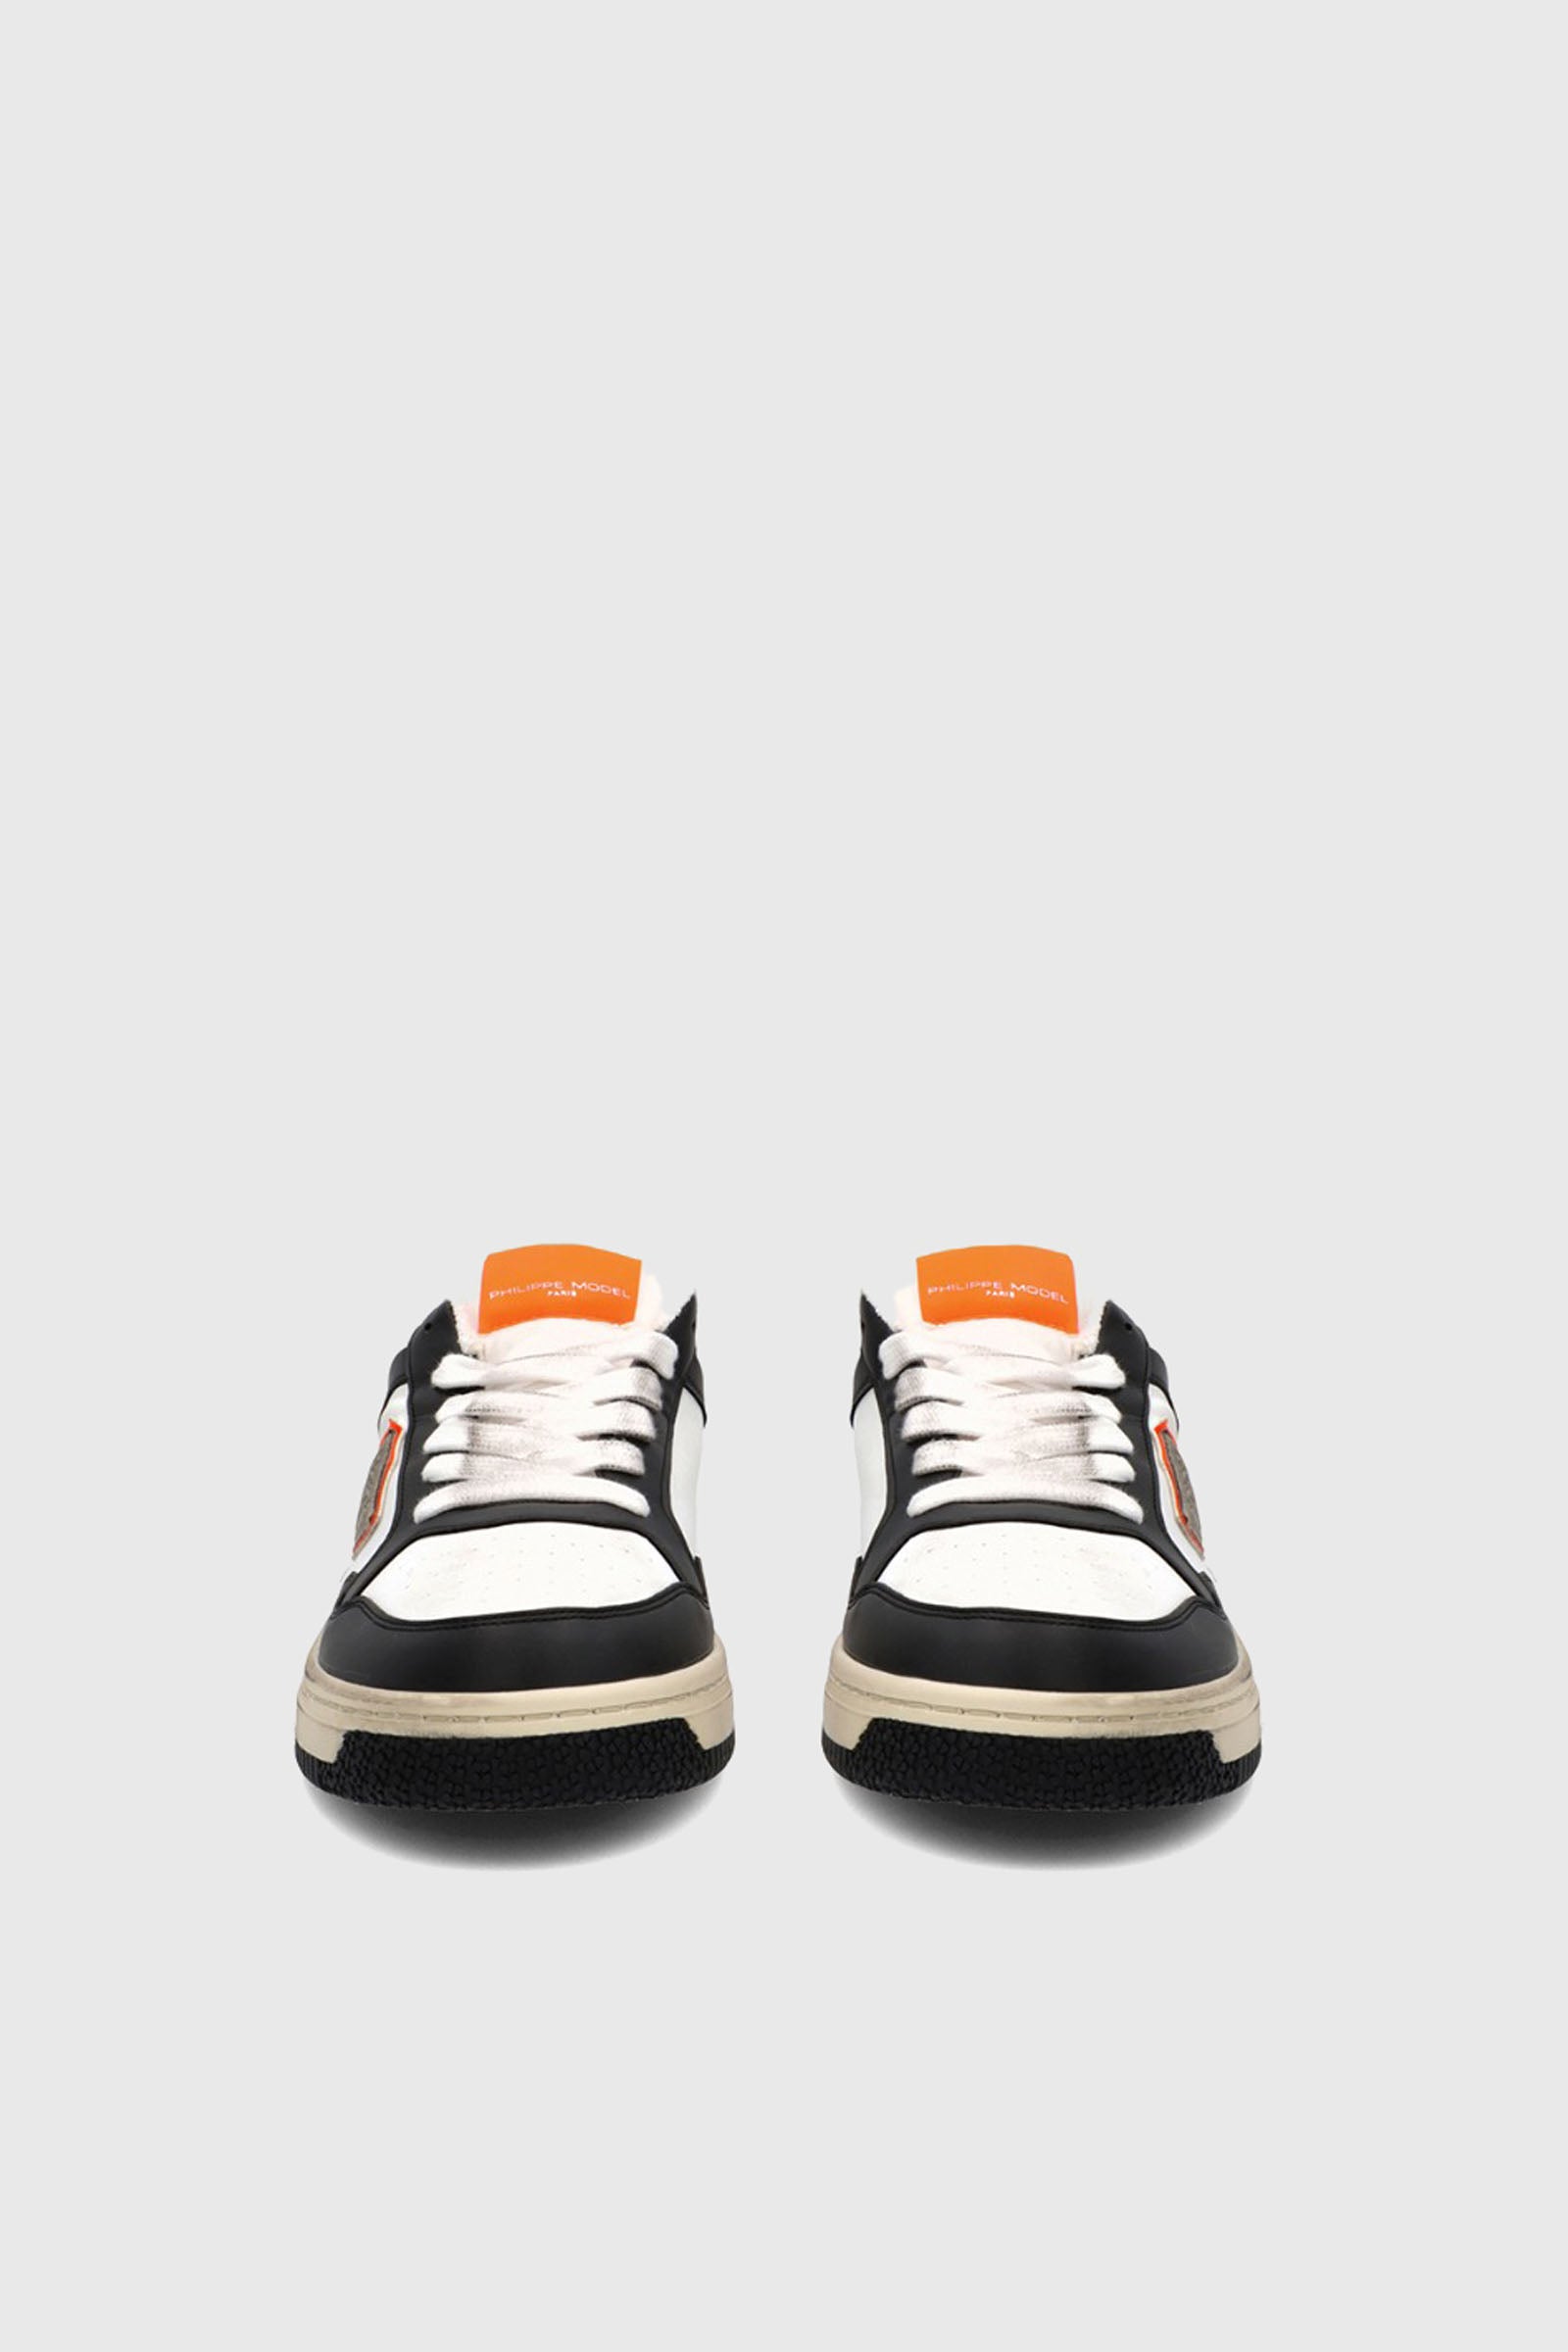 Philippe Model Sneaker Lyon Recycle Mixage Noir Orange Nero/bianco Uomo - 3